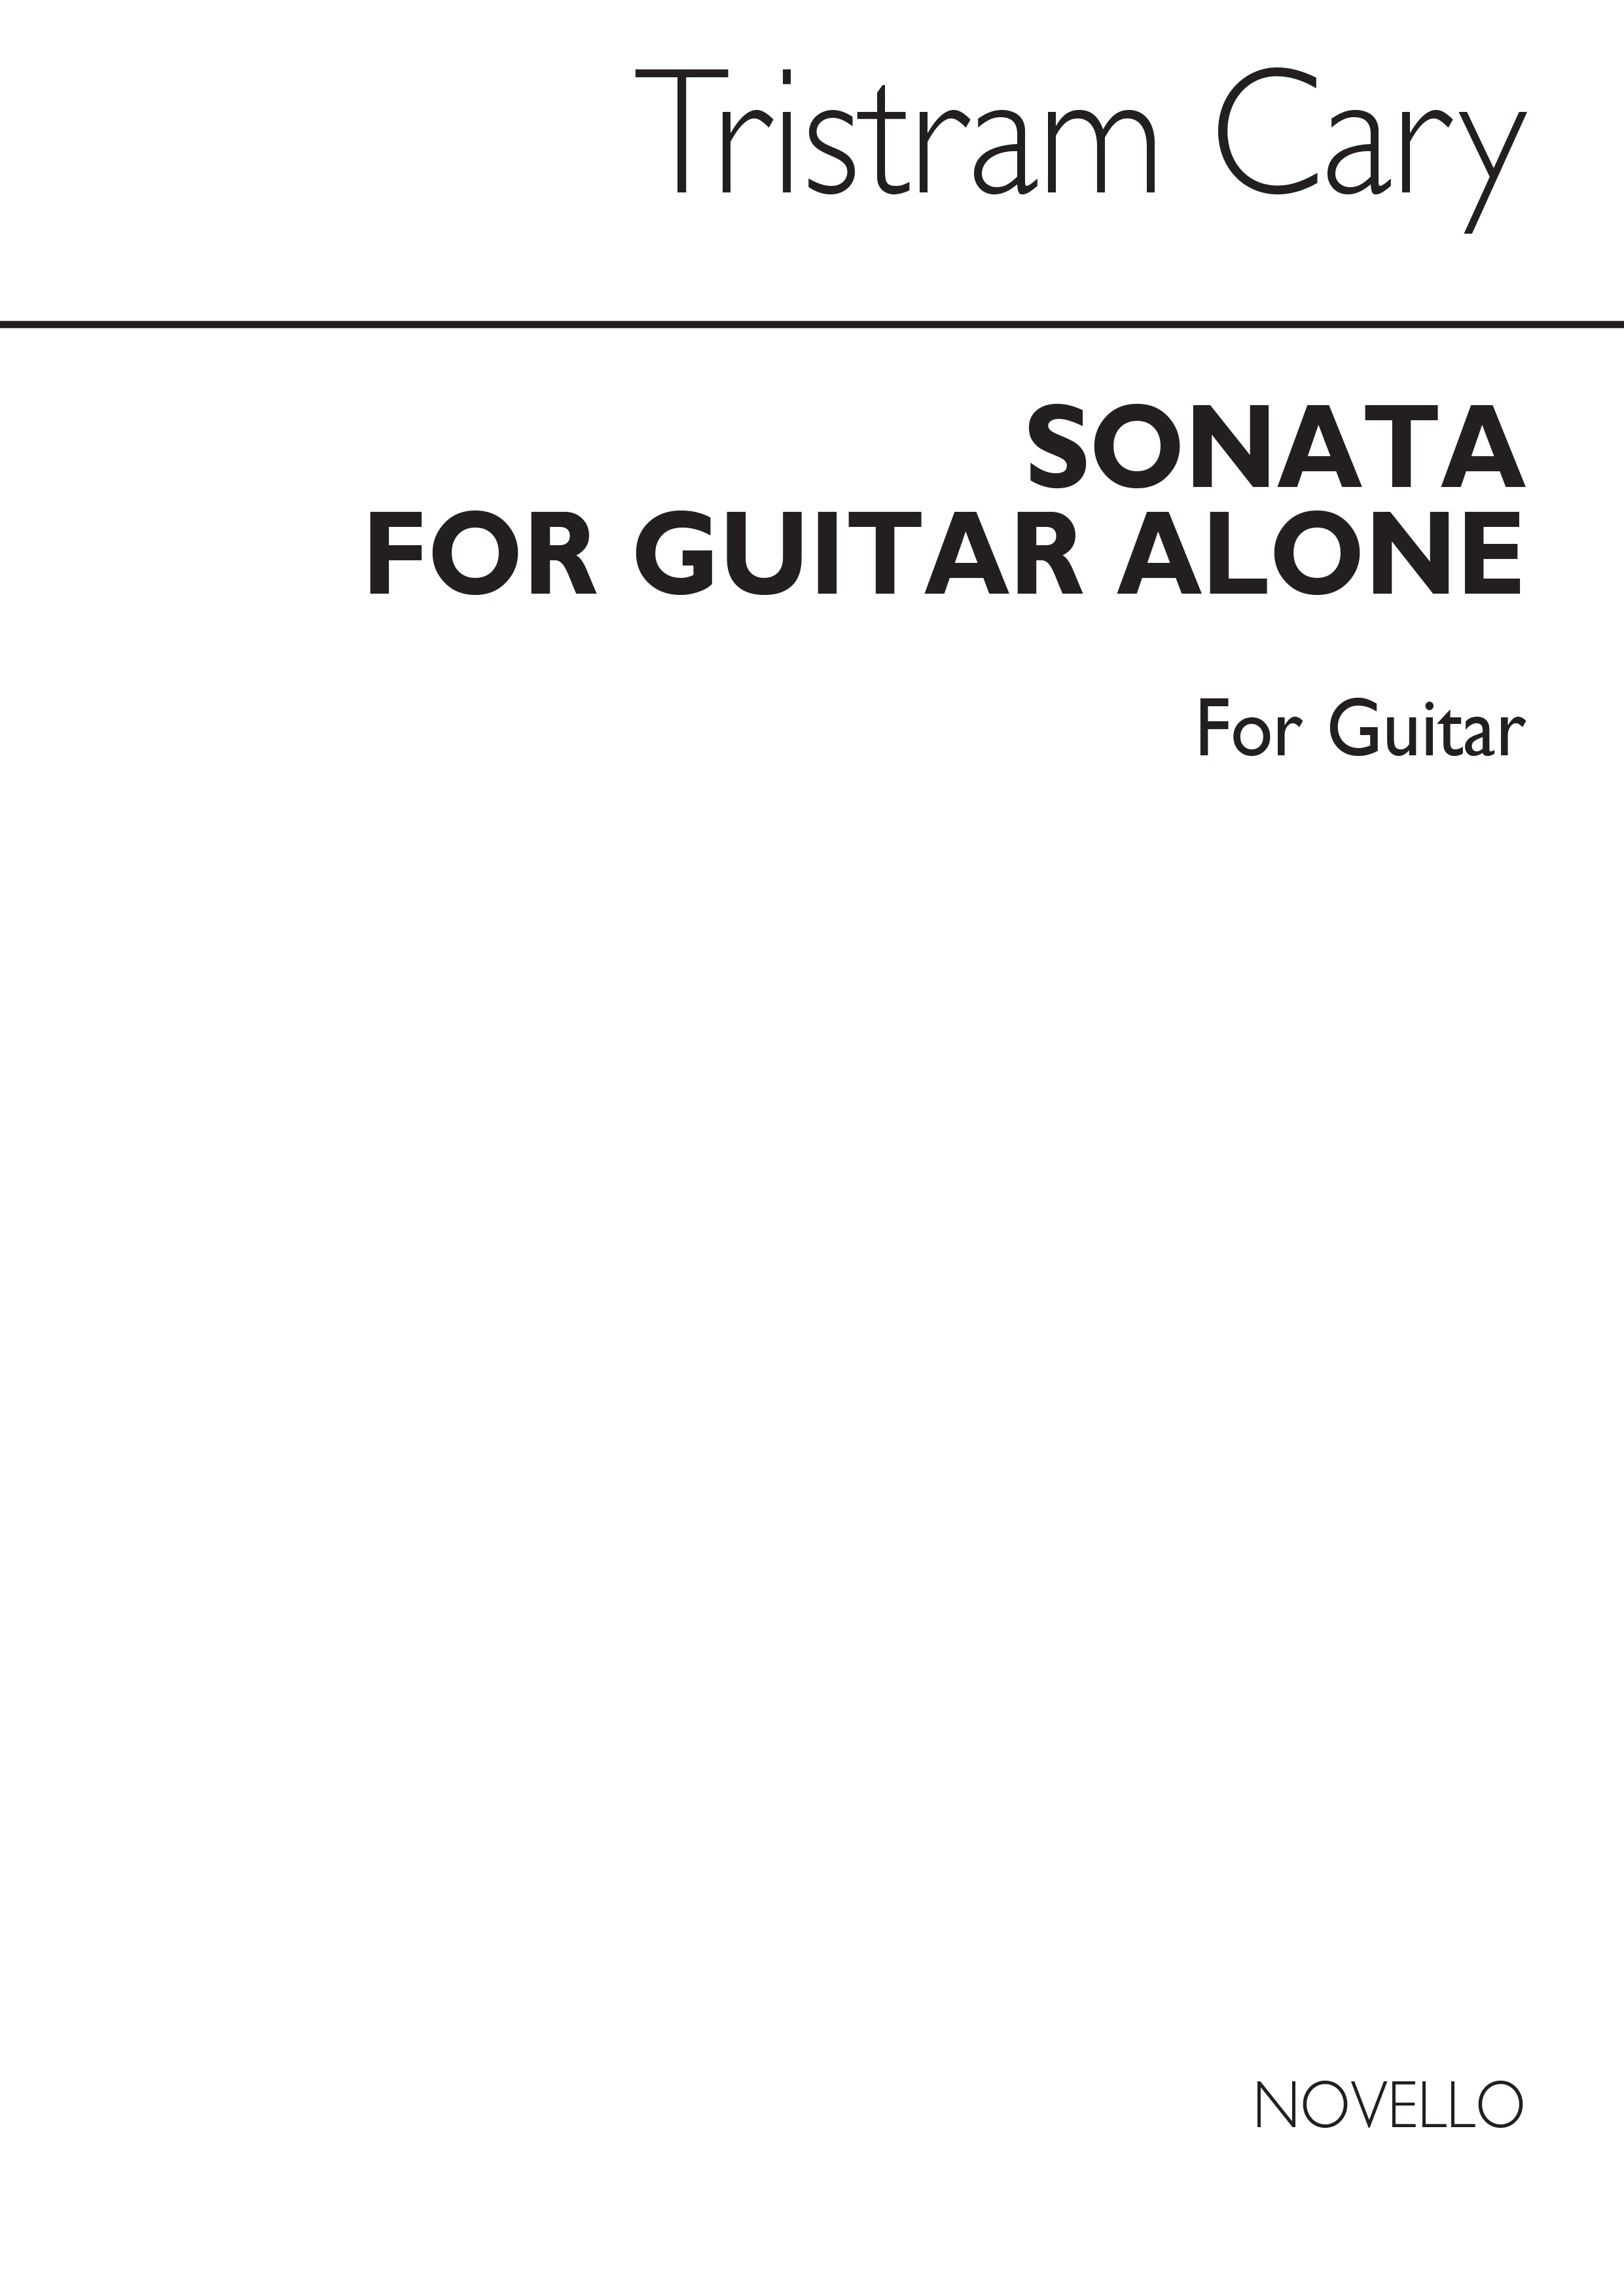 Tristram Cary: Sonata For Guitar Alone